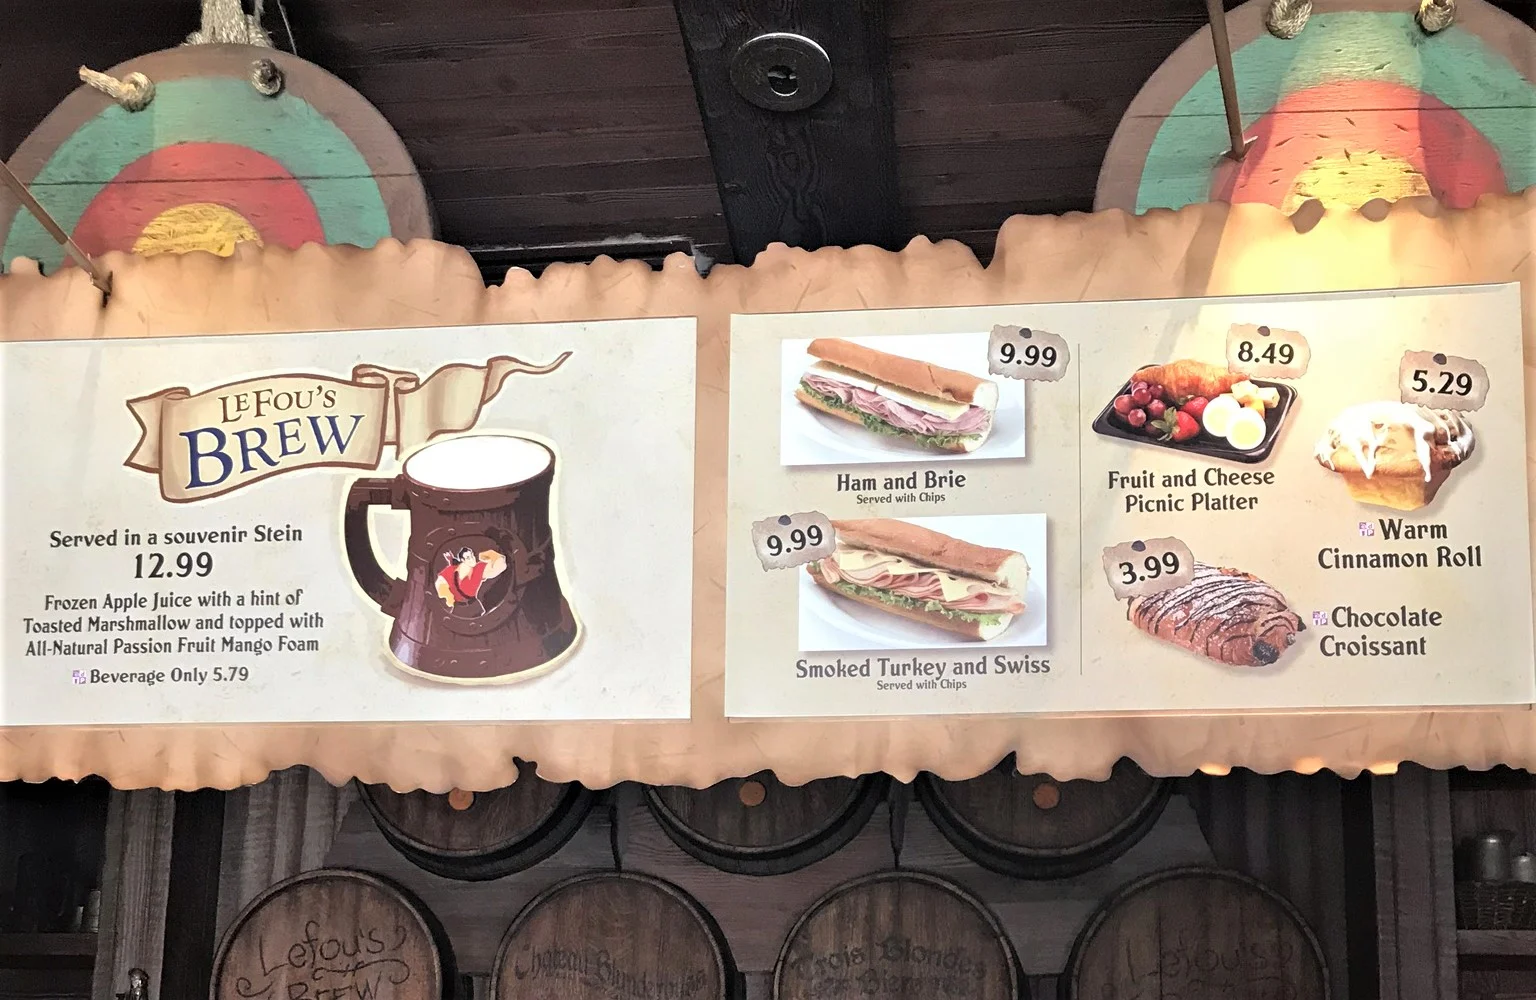 gaston's tavern menu sign